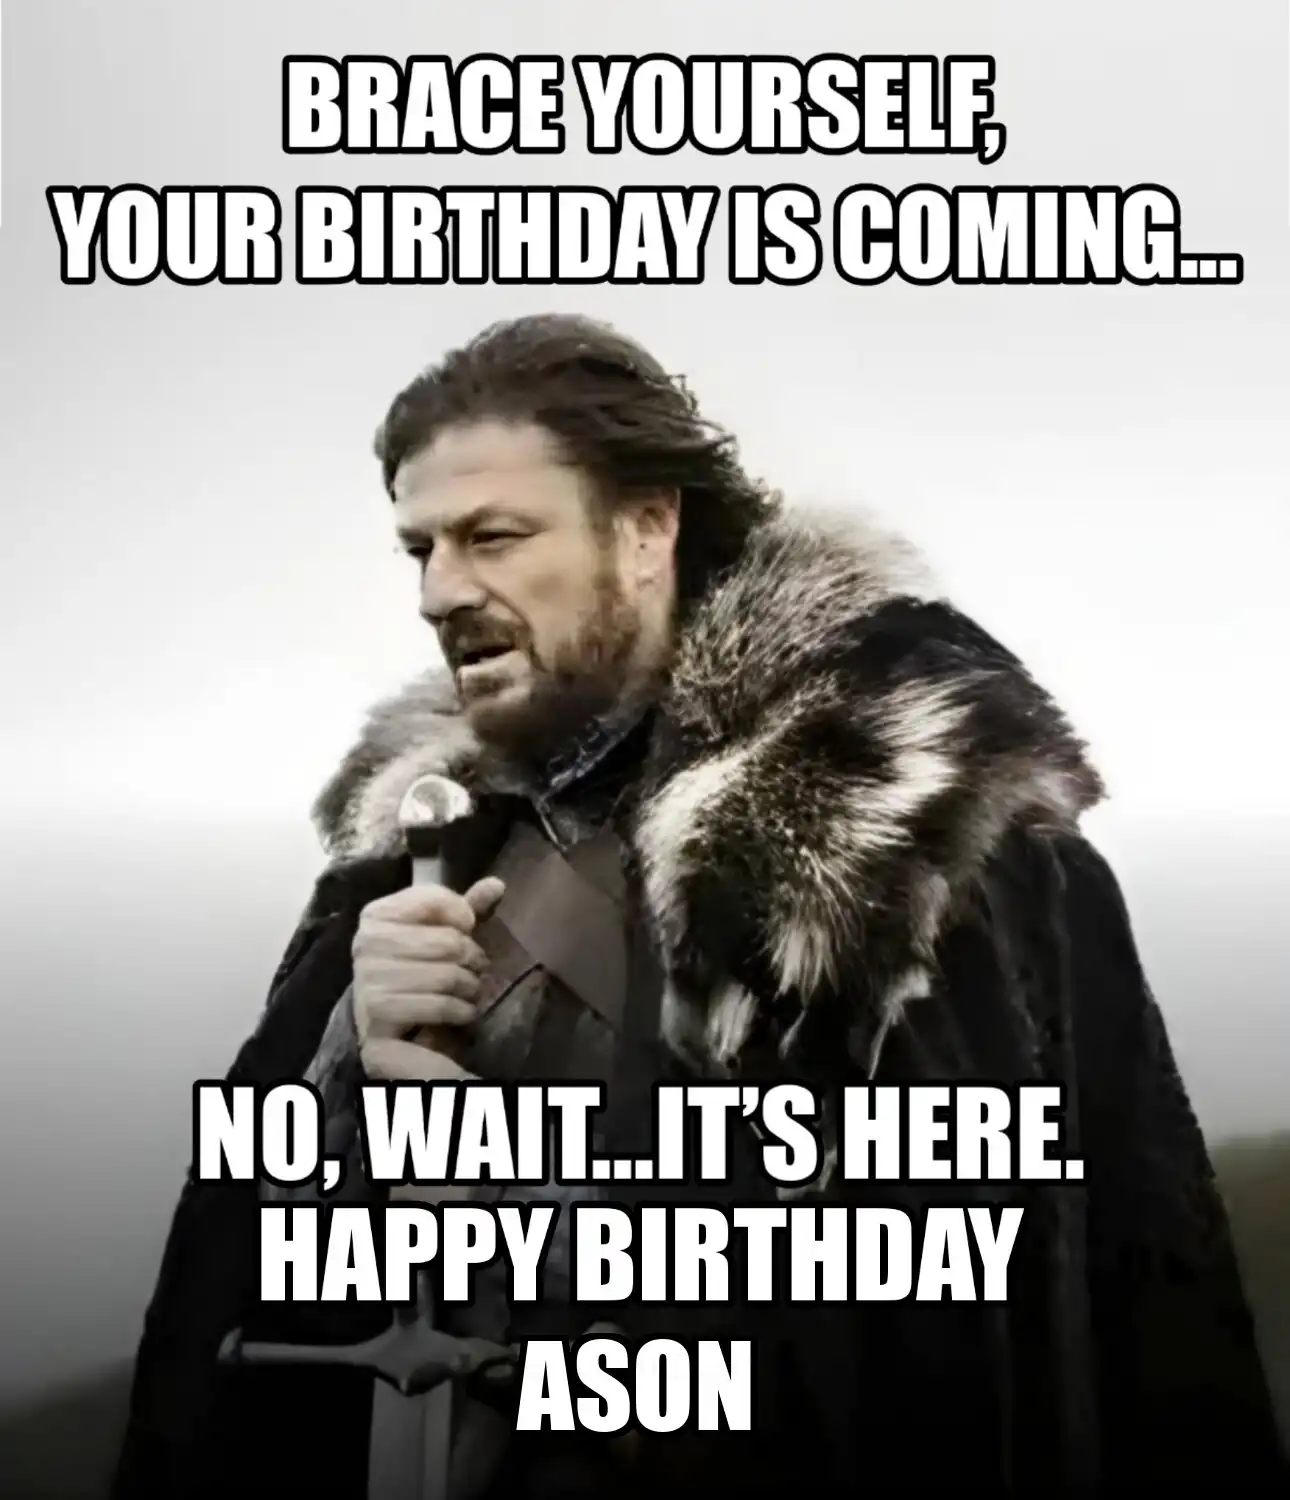 Happy Birthday Ason Brace Yourself Your Birthday Is Coming Meme